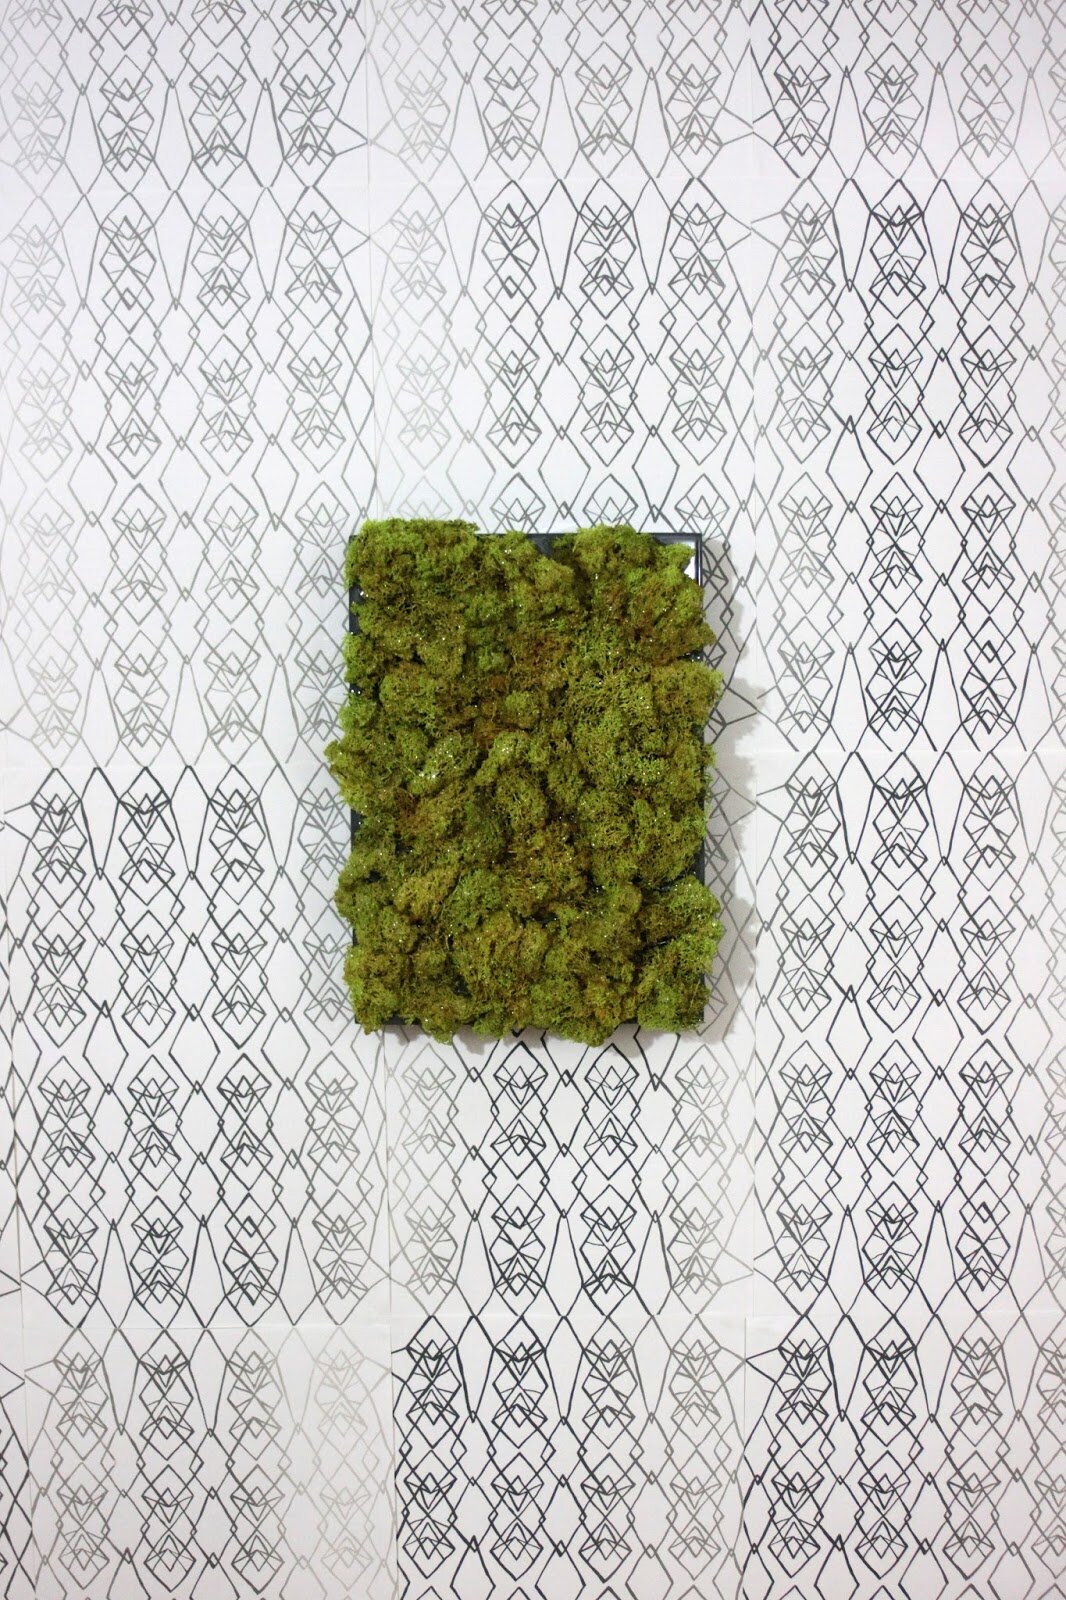   Untitled (Captured Moss)  (moss, acrylic resin on panel) 2015 